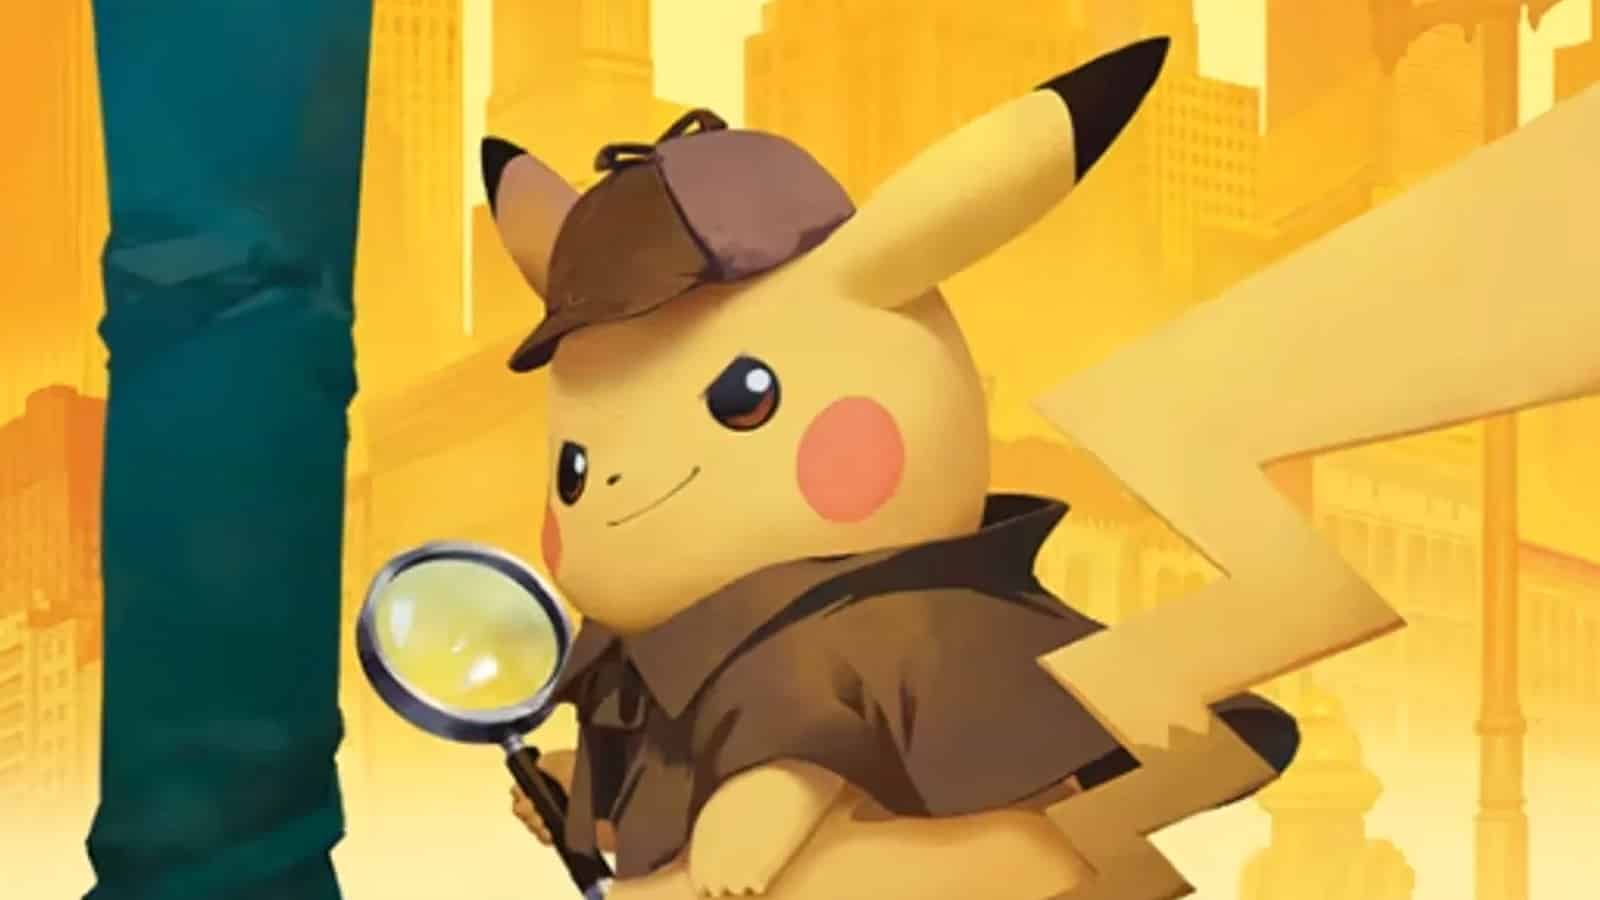 Pokémon: Detective Pikachu 2 still 'in active development' says Legendary